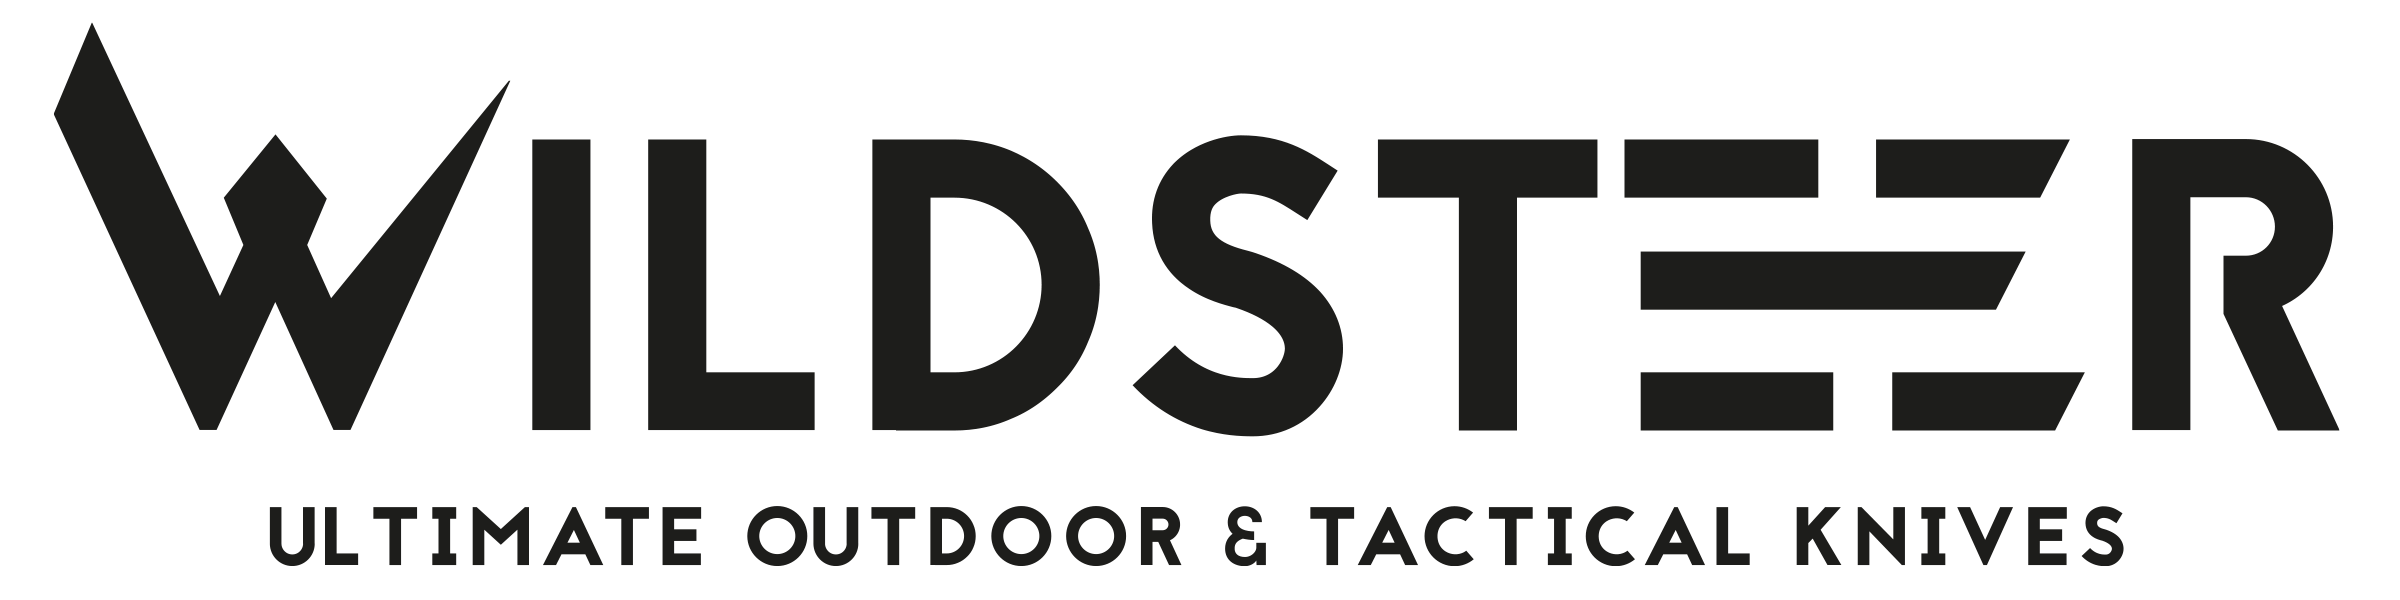 Wildsteer logo